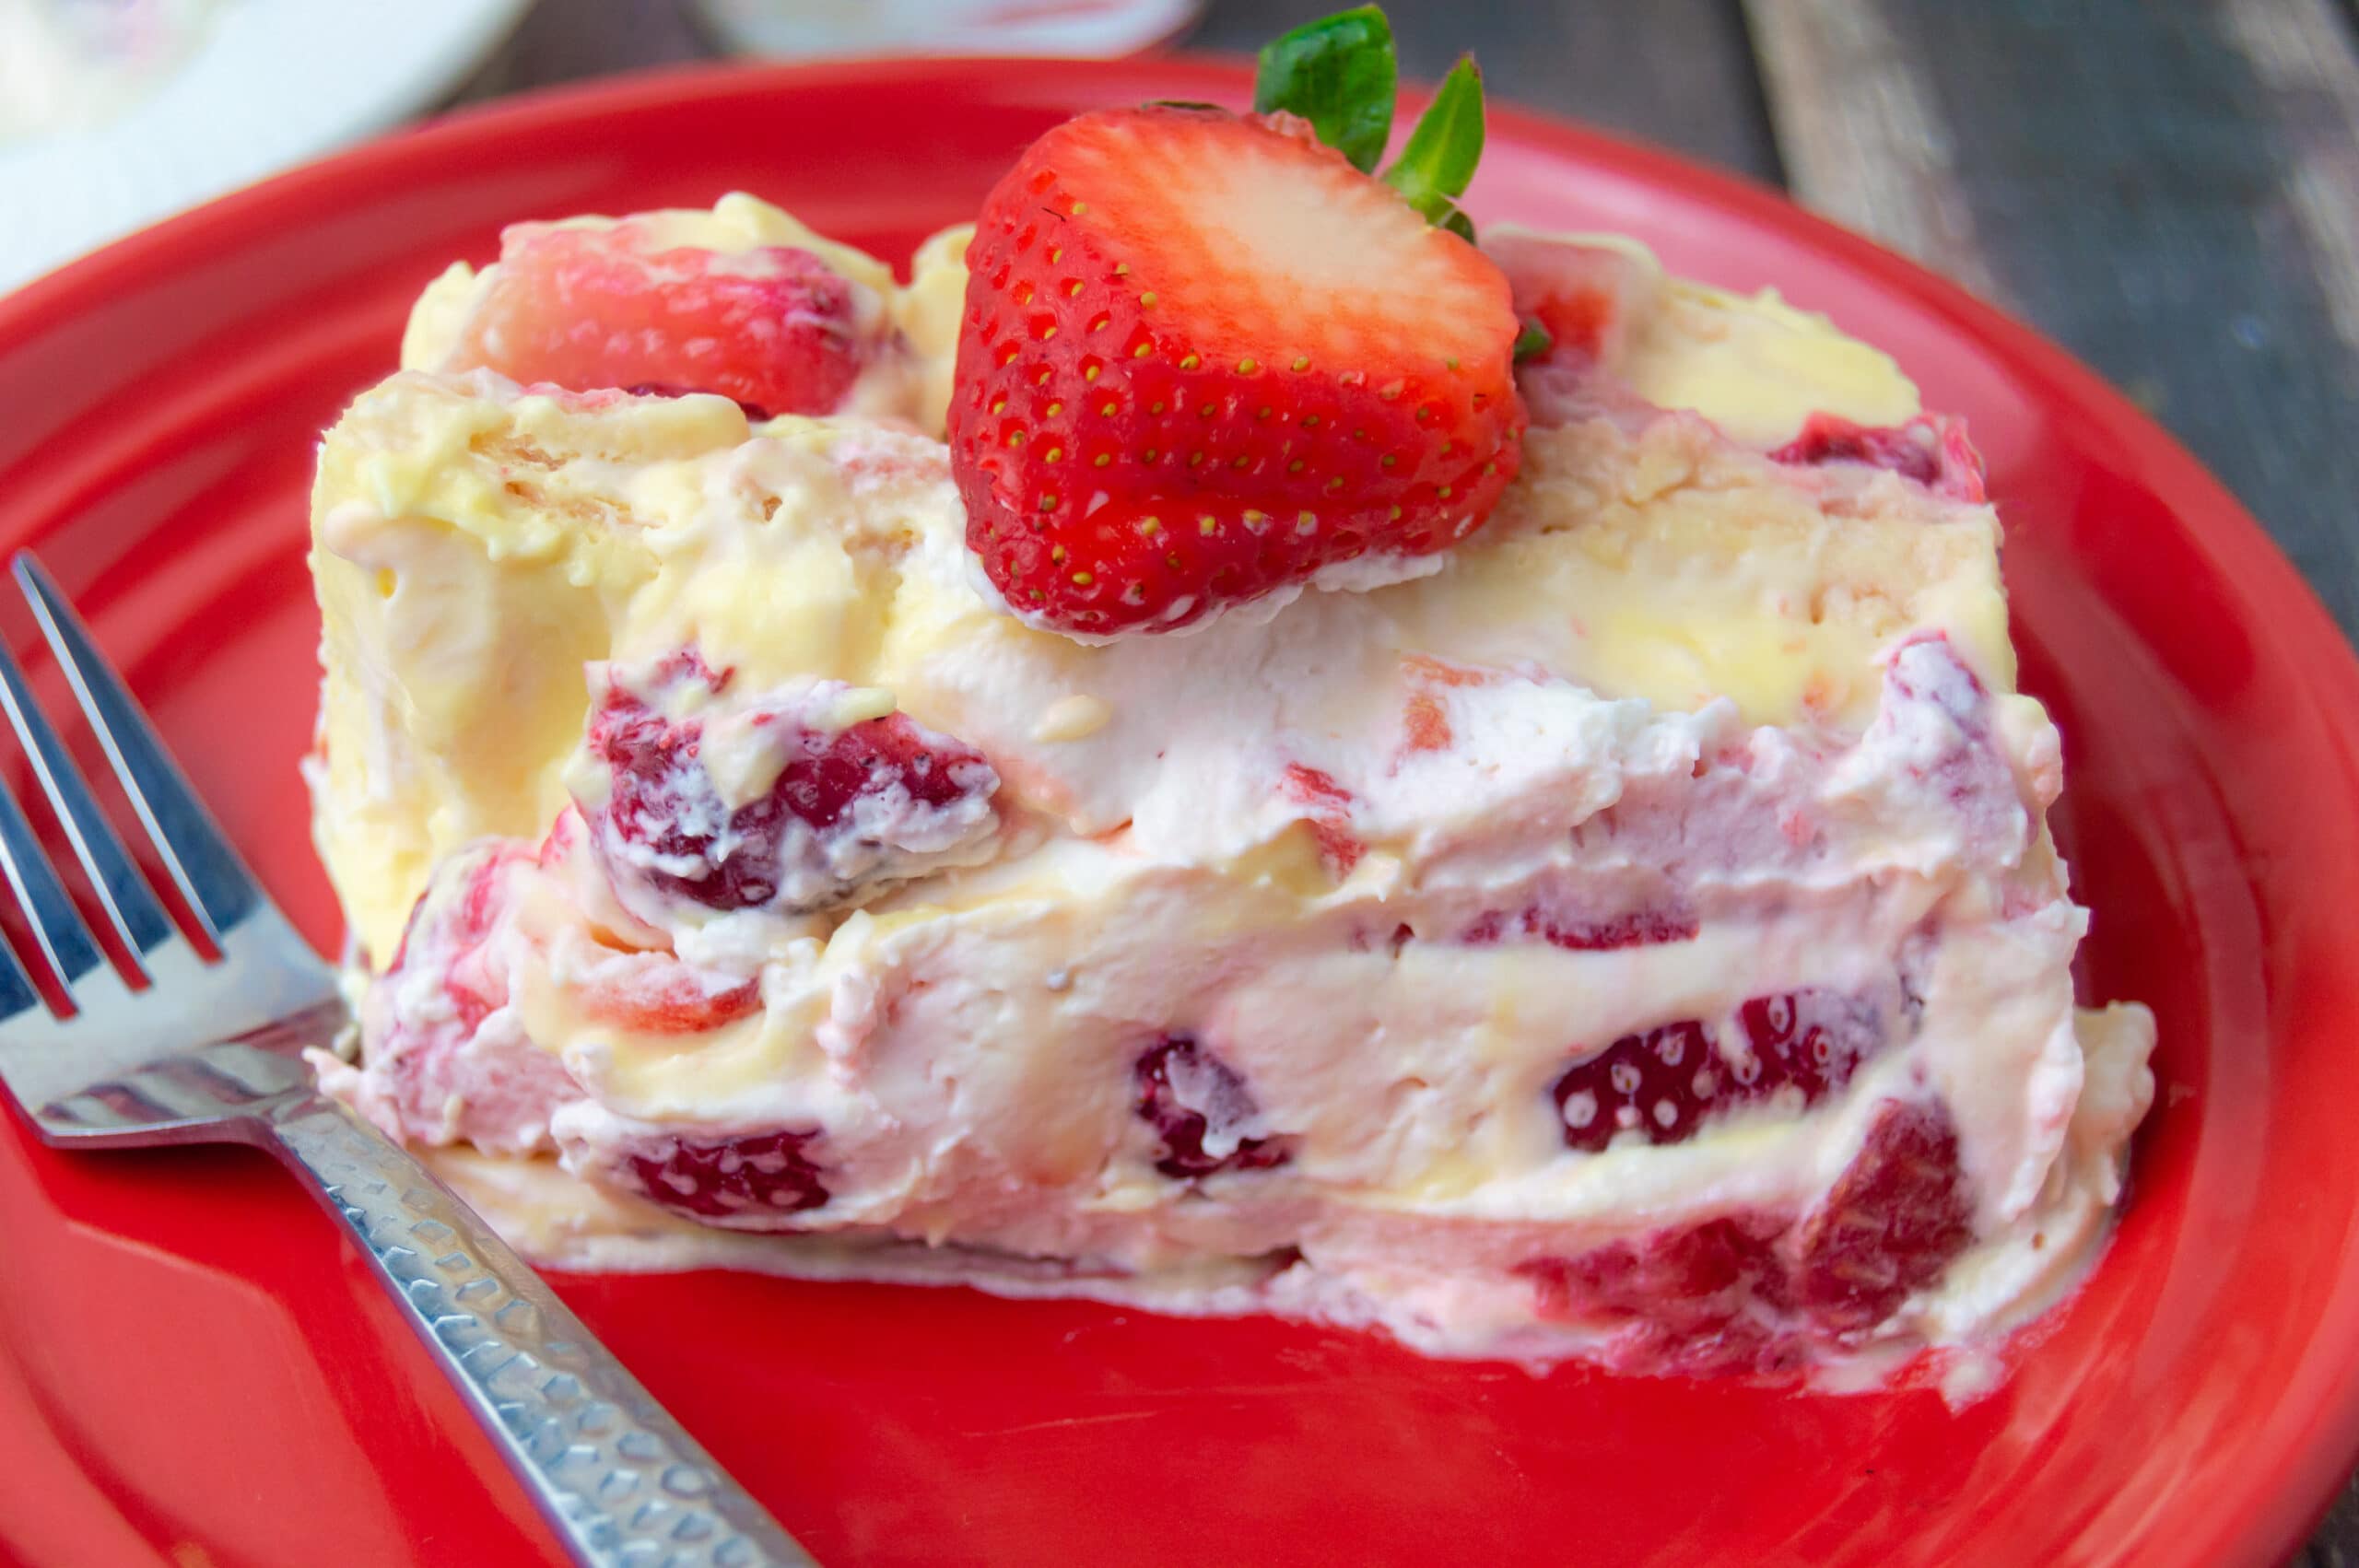 Strawberry Shortcake Icebox Cake - Gluten Free Dessert